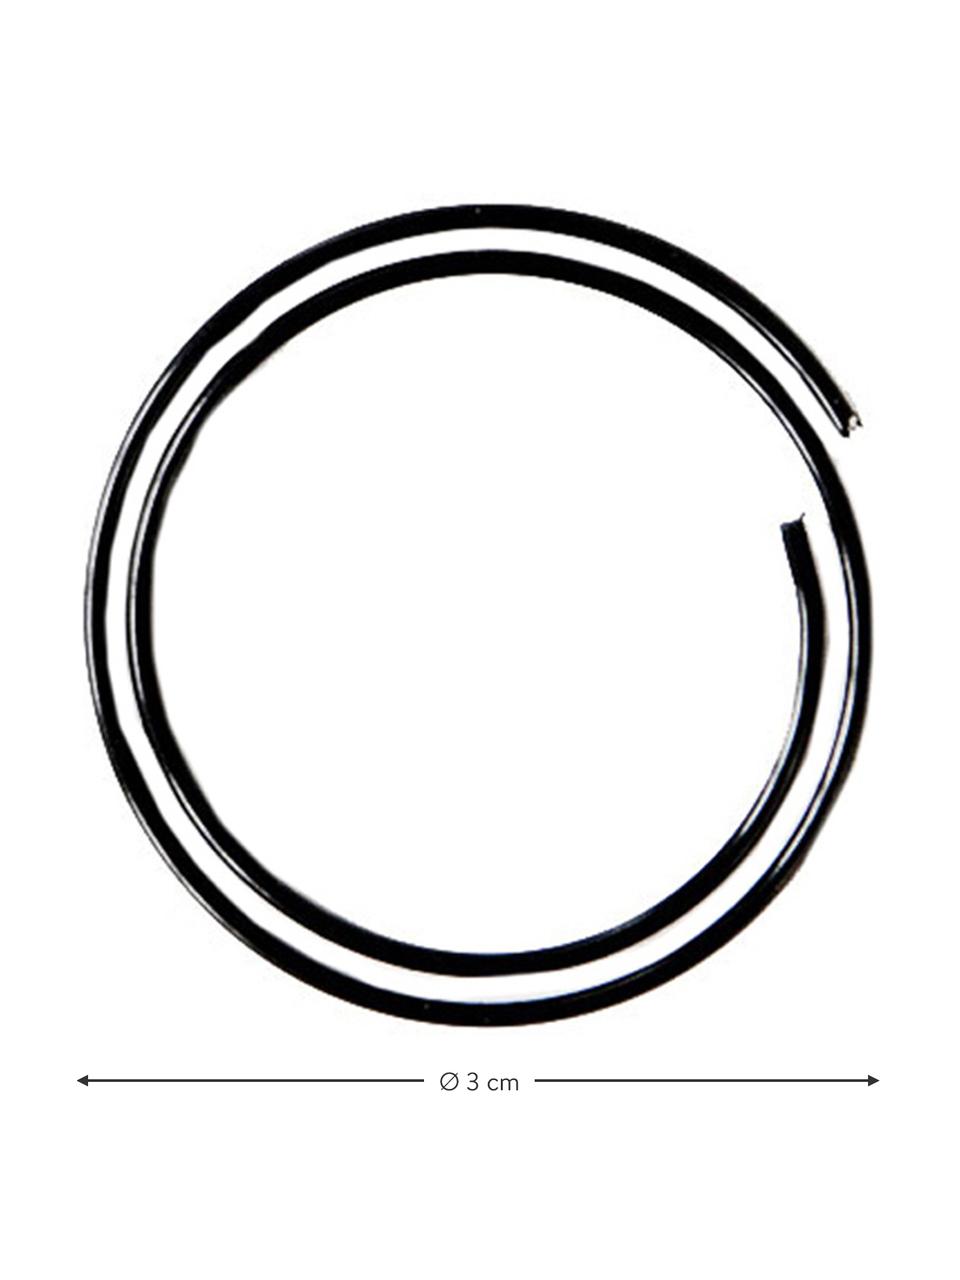 Trombone Geometria, 9 élém., Métal, laqué, Noir, larg. 3 x haut. 3 cm